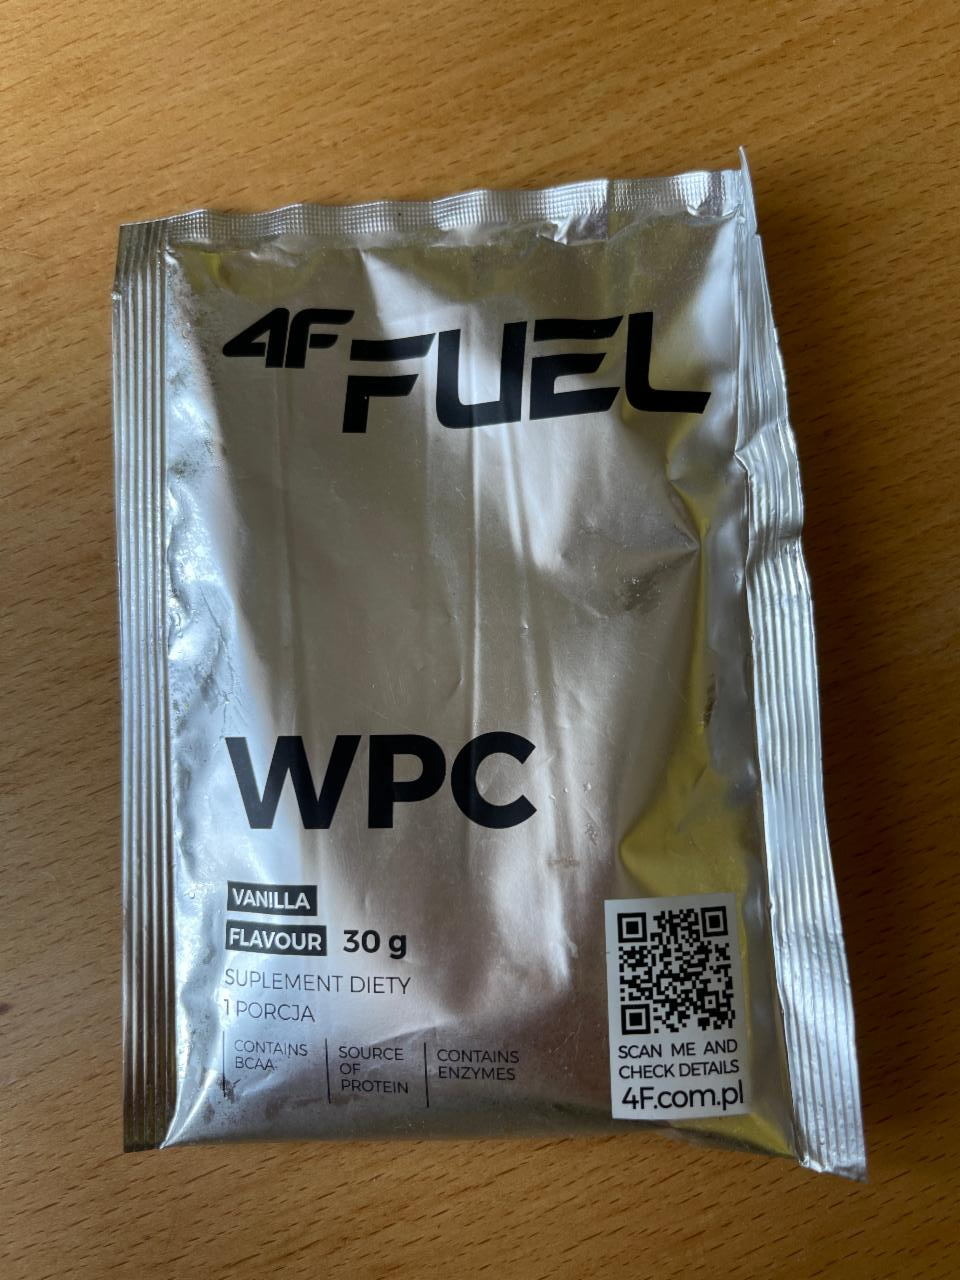 Fotografie - WPC Vanilla flavour 4F Fuel